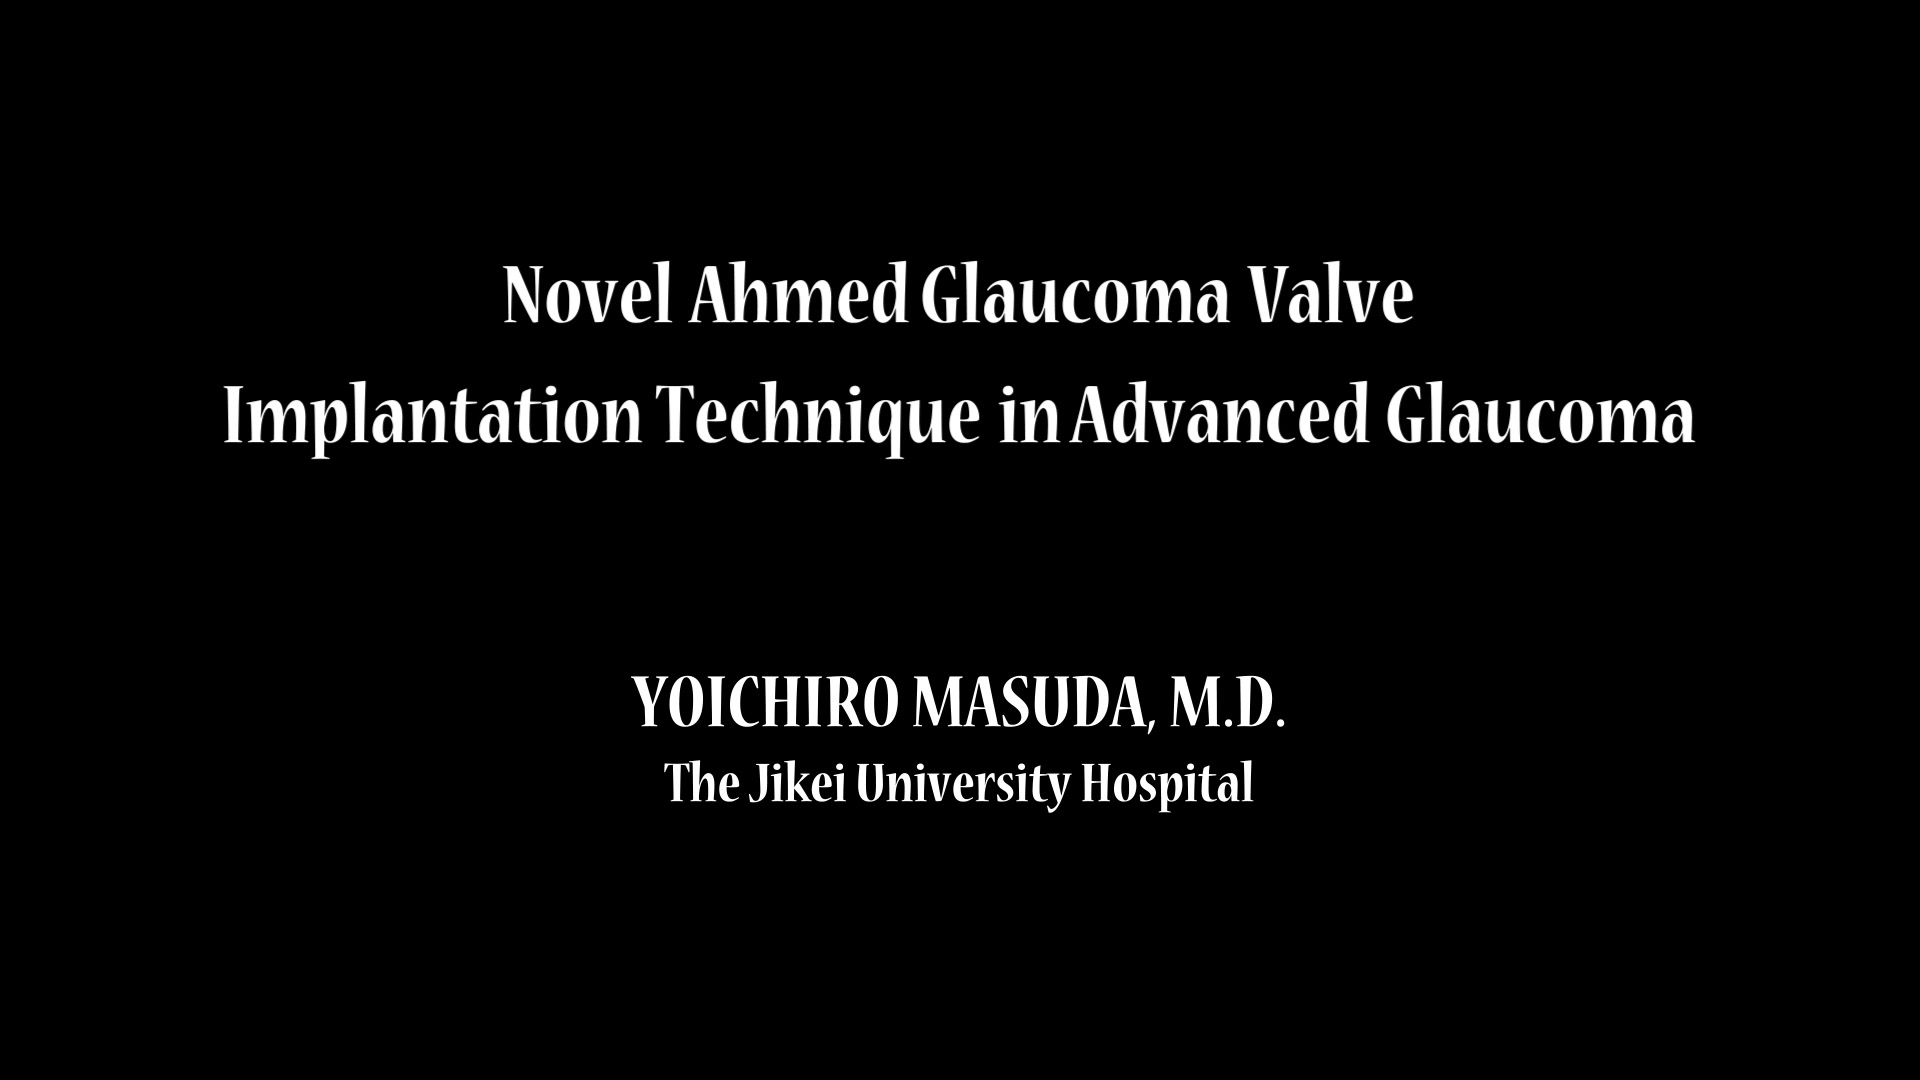 Novel Ahmed Glaucoma Valve Implantation Technique in Advanced Glaucoma